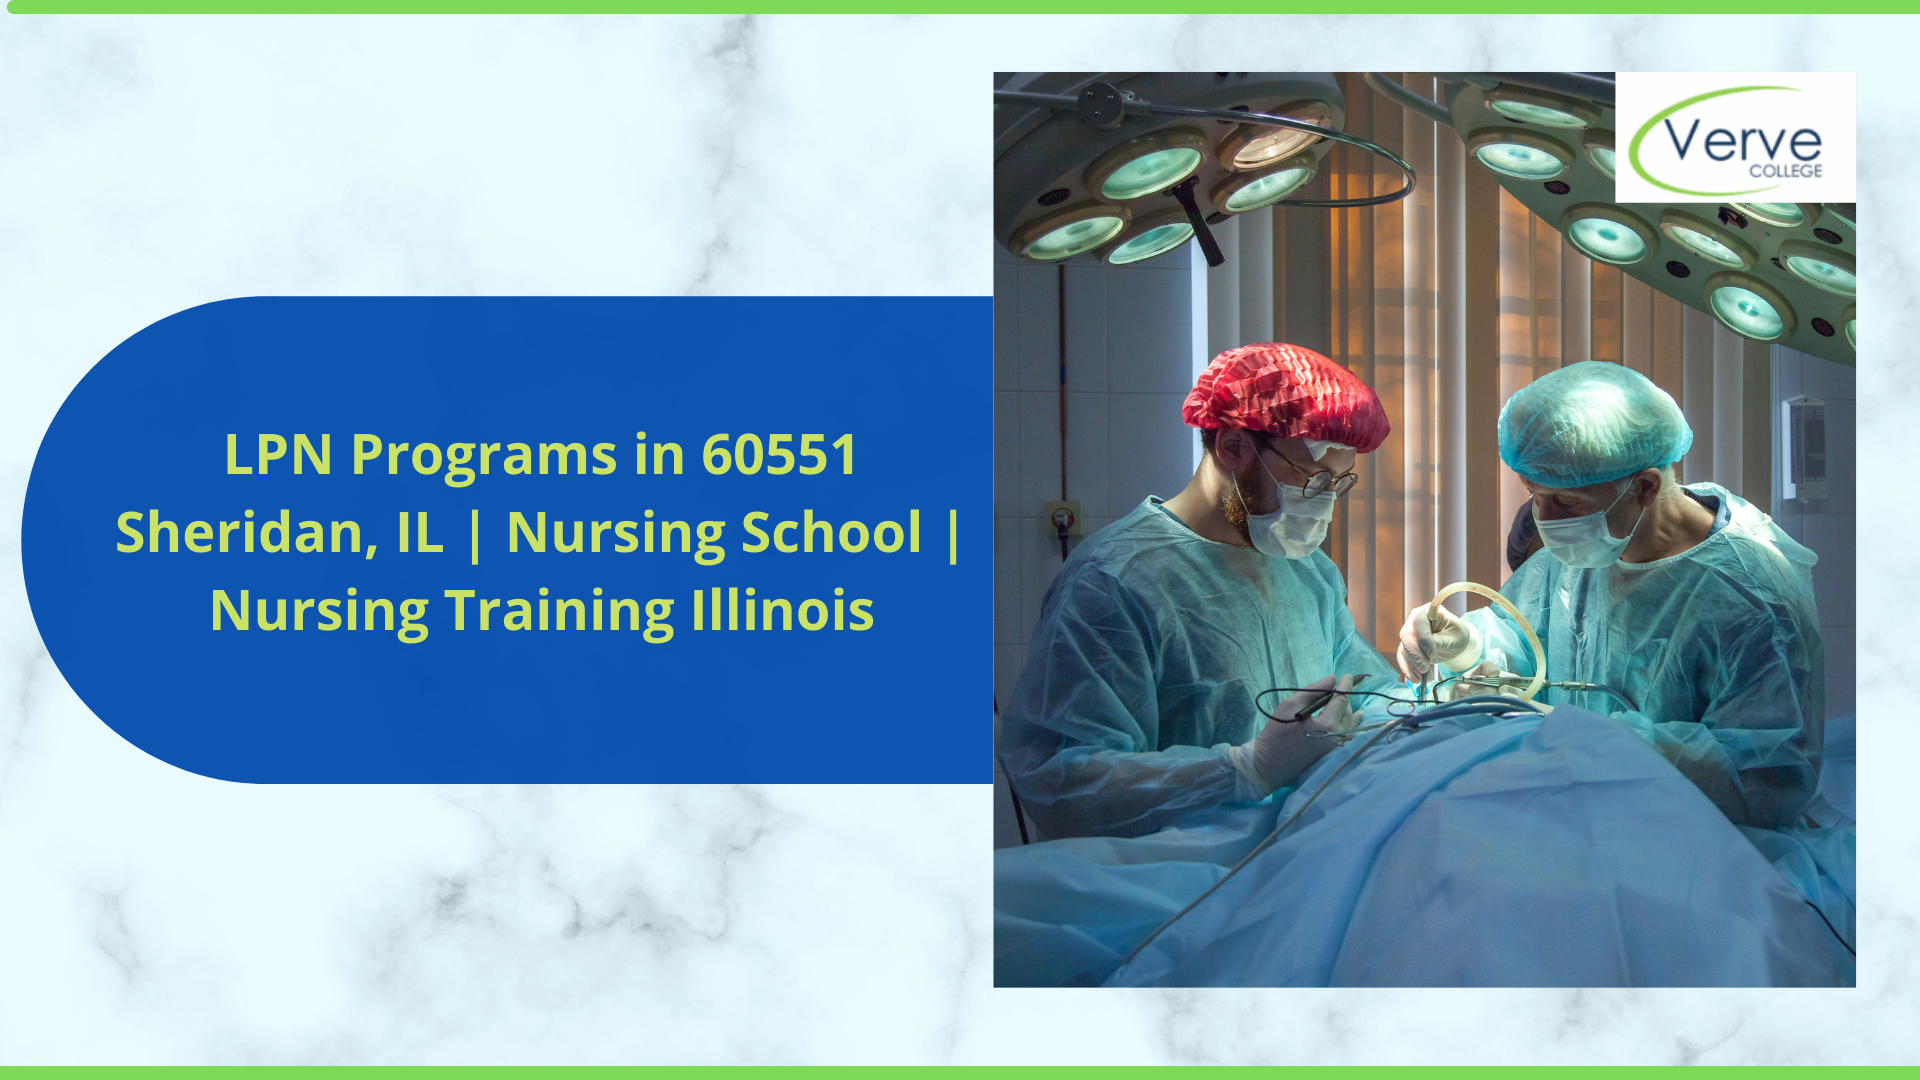 LPN Programs in 60551 Sheridan, IL | Nursing School | Nursing Training Illinois